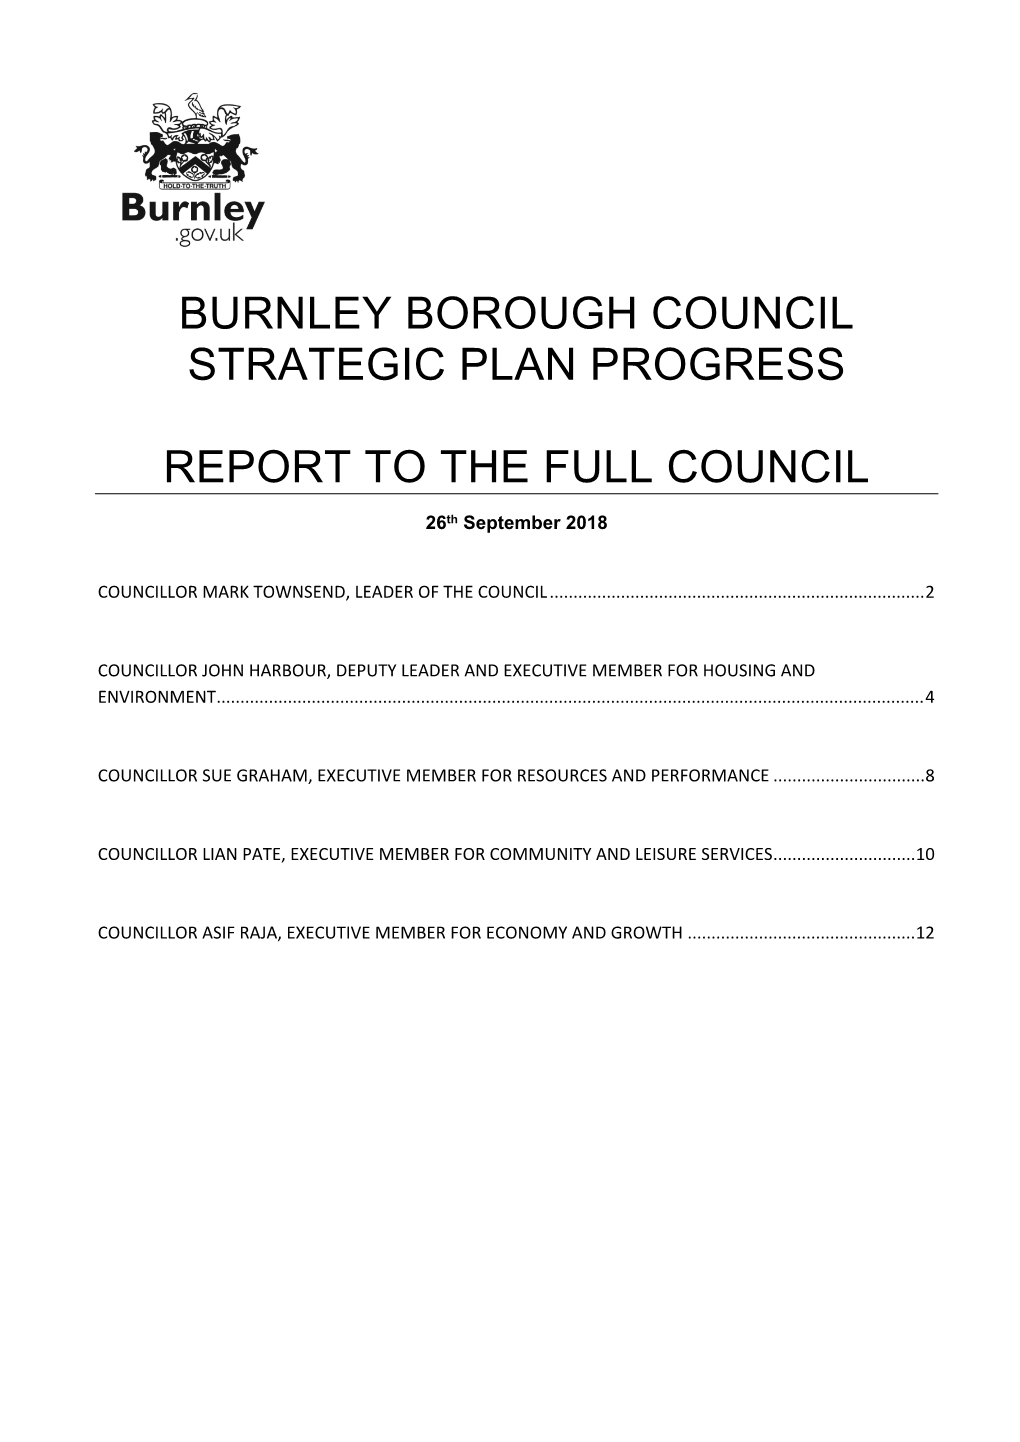 Strategic Plan Progress Report to Full Council